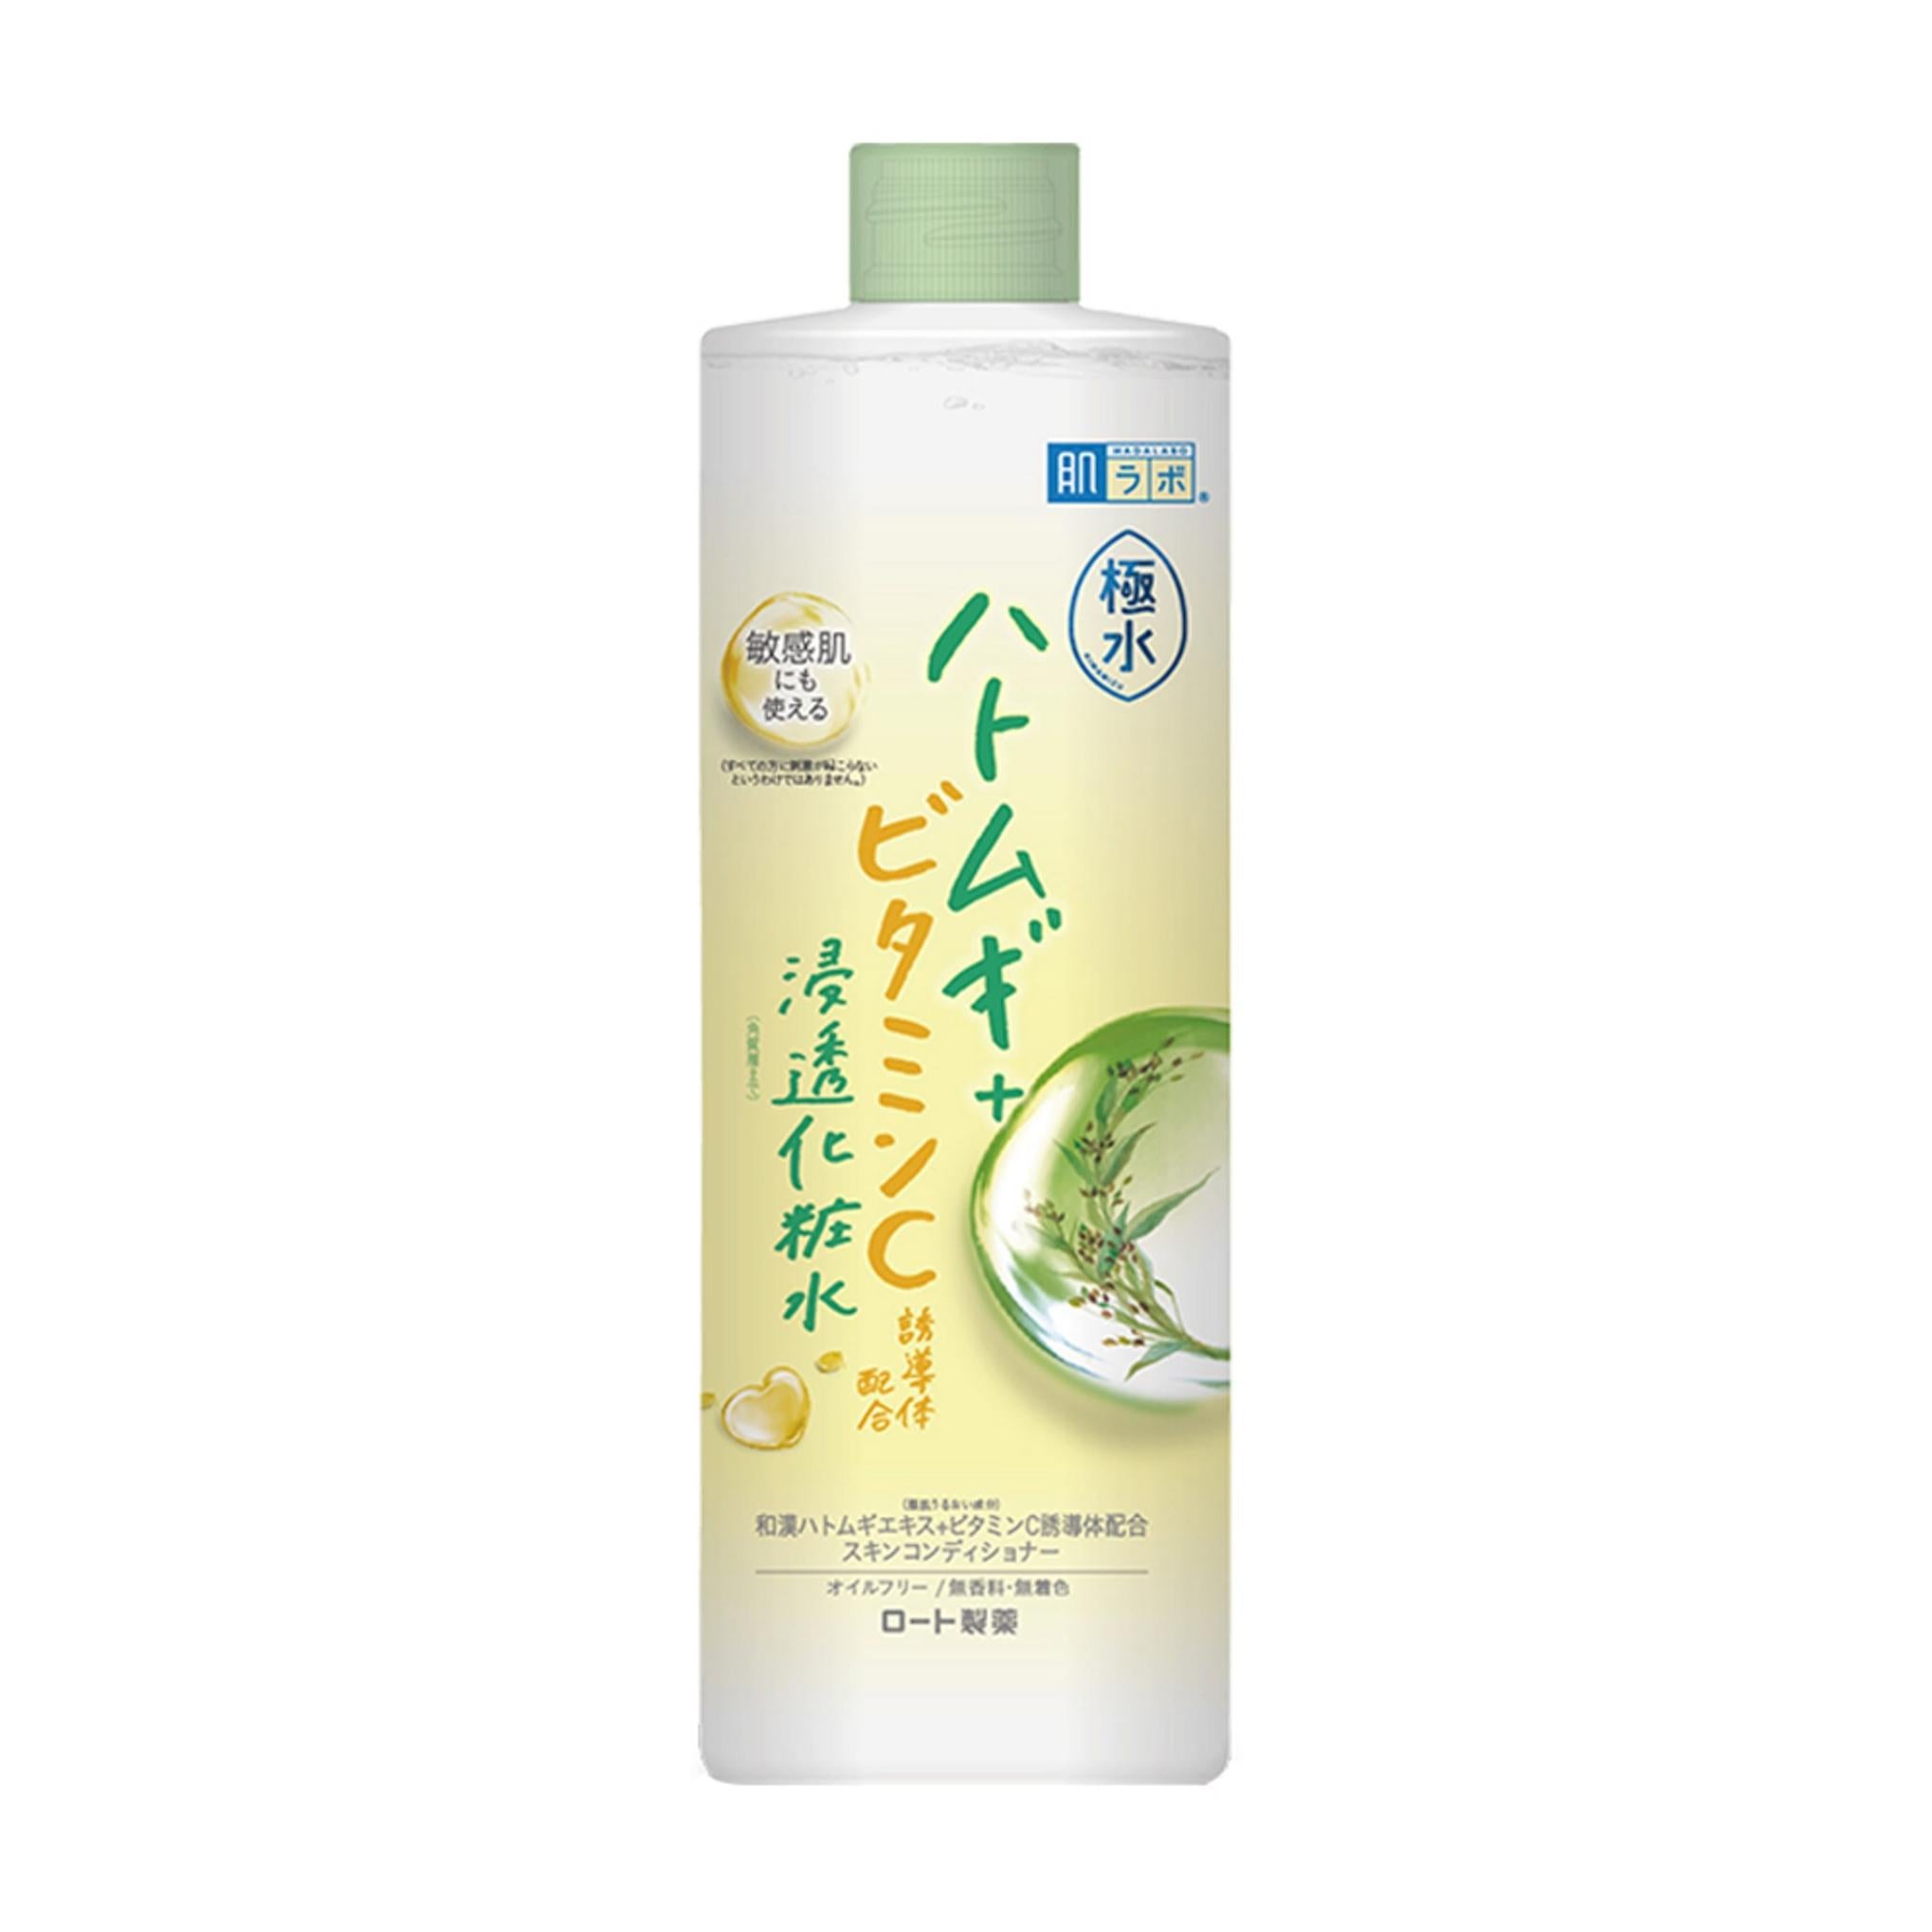 Hadalabo Giwamitsu Hatomugi & Vitamin C Water Toner